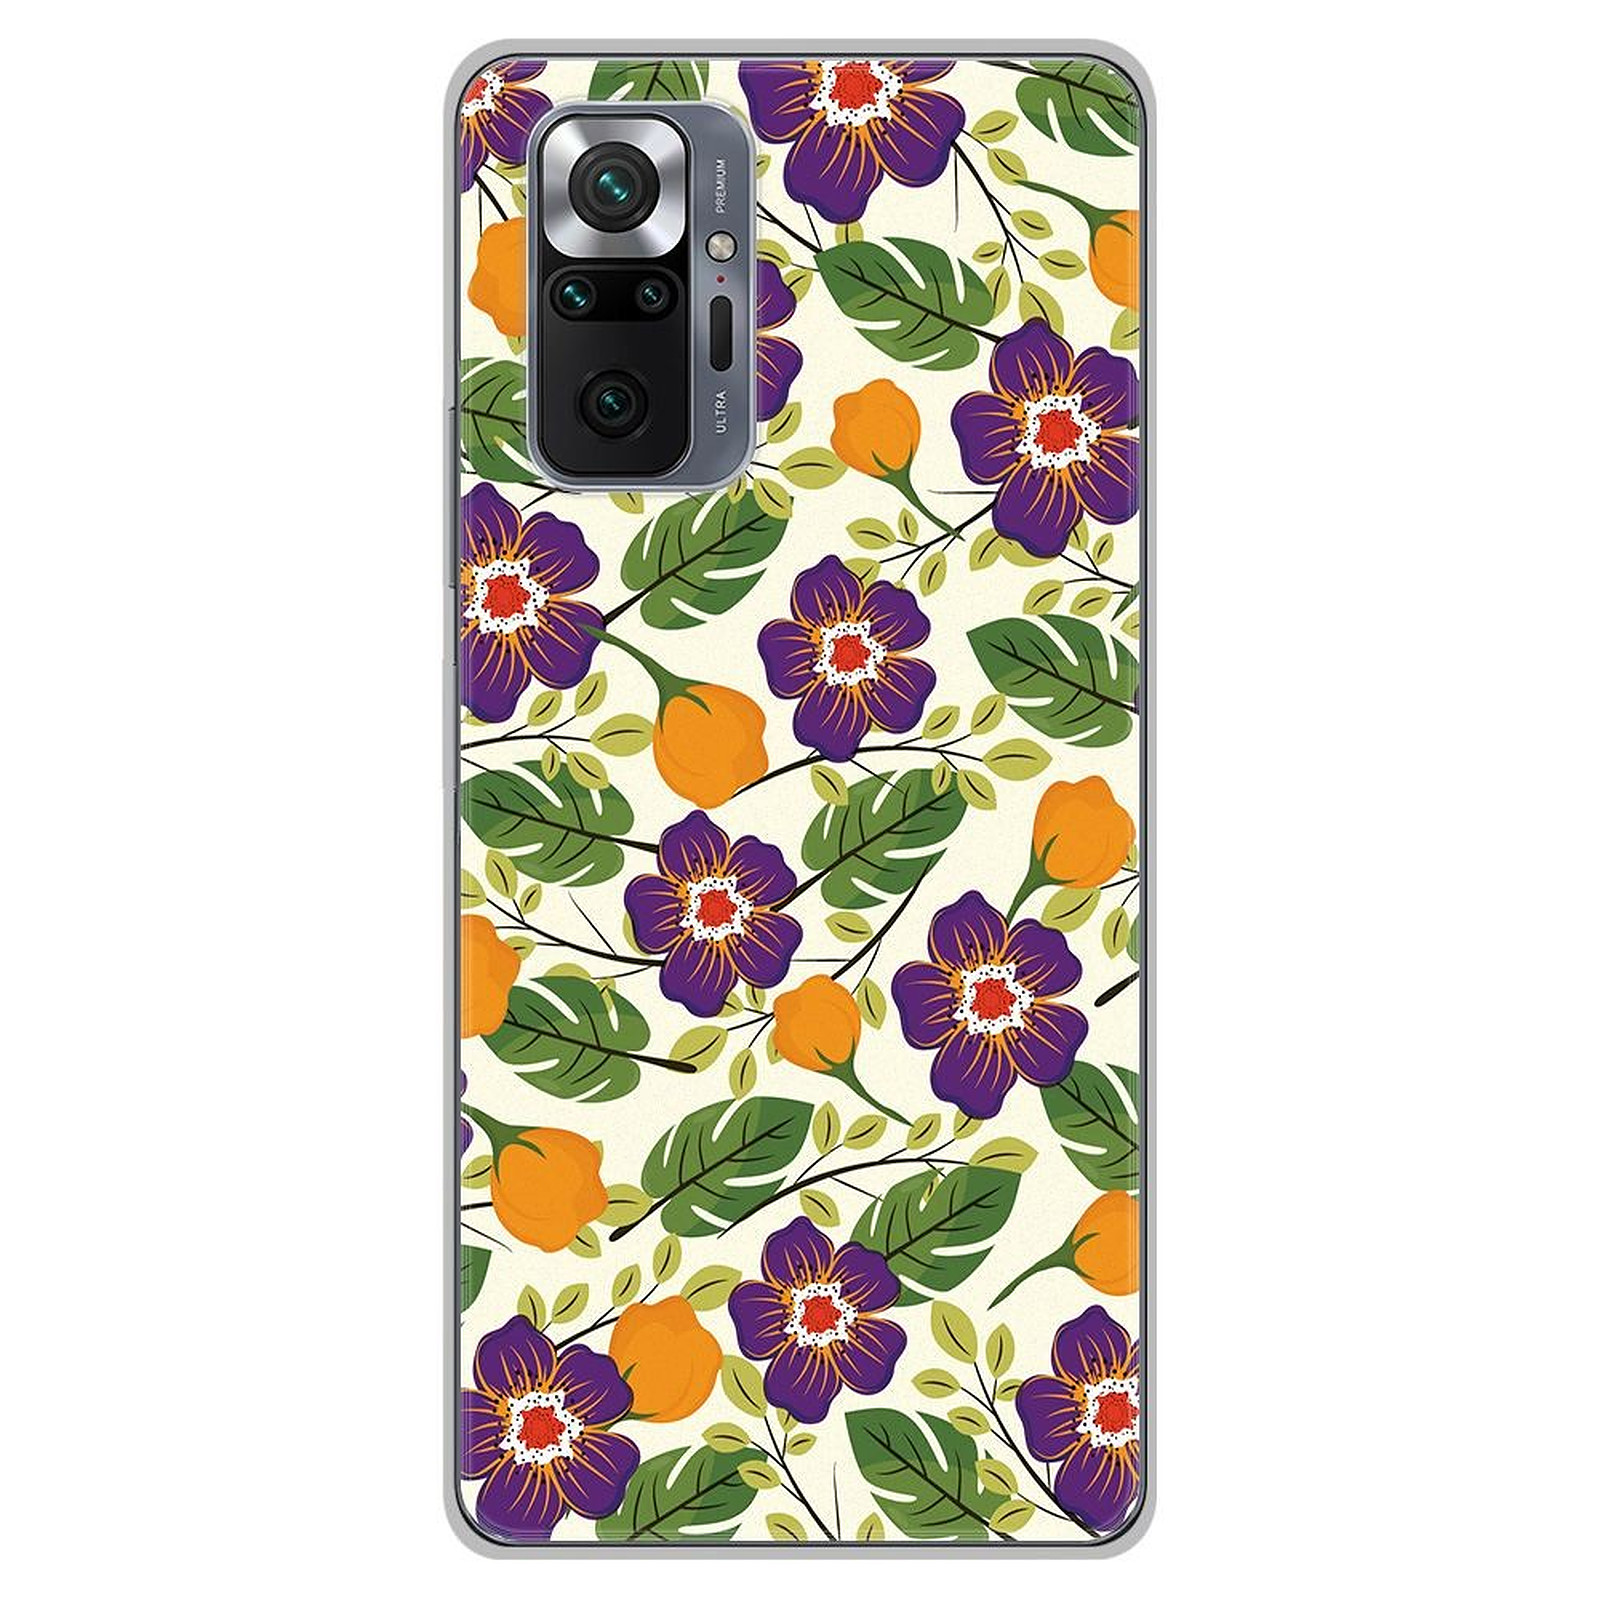 1001 Coques Coque silicone gel Xiaomi Redmi Note 10 Pro motif Fleurs Violettes - Coque telephone 1001Coques